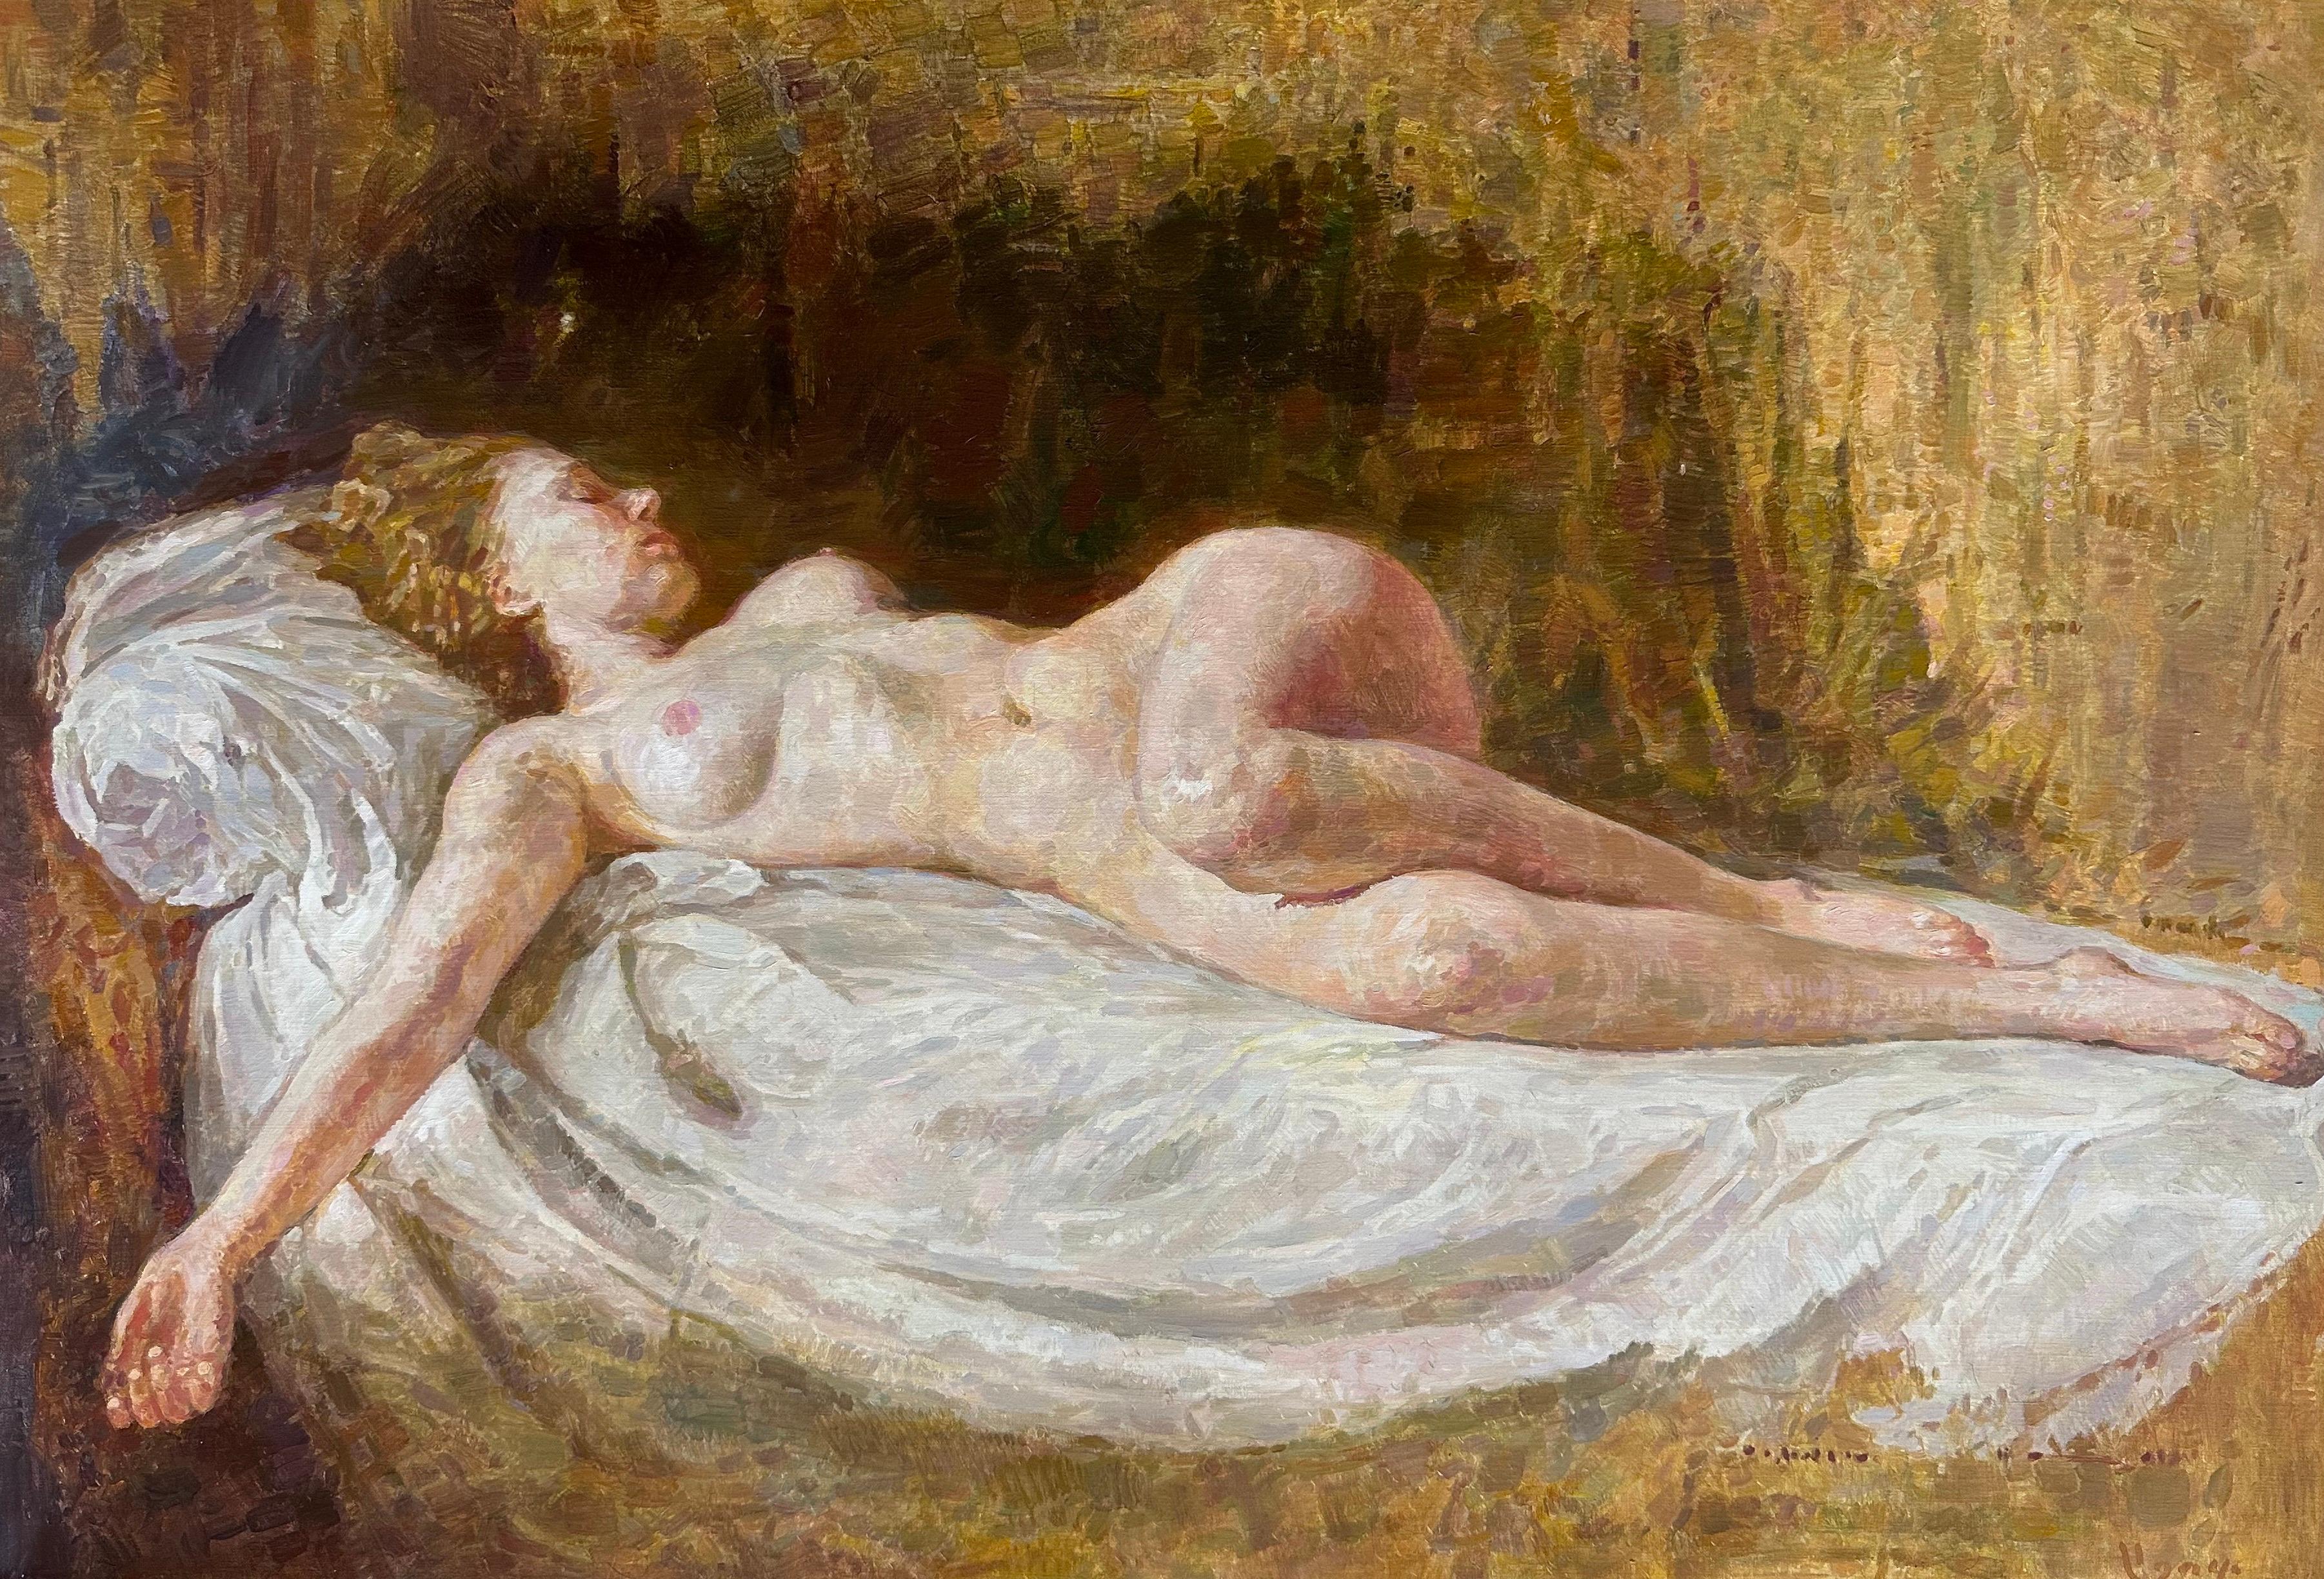 Nude Woman, Original Oil Painting, Handmade Artwork, One of a Kind